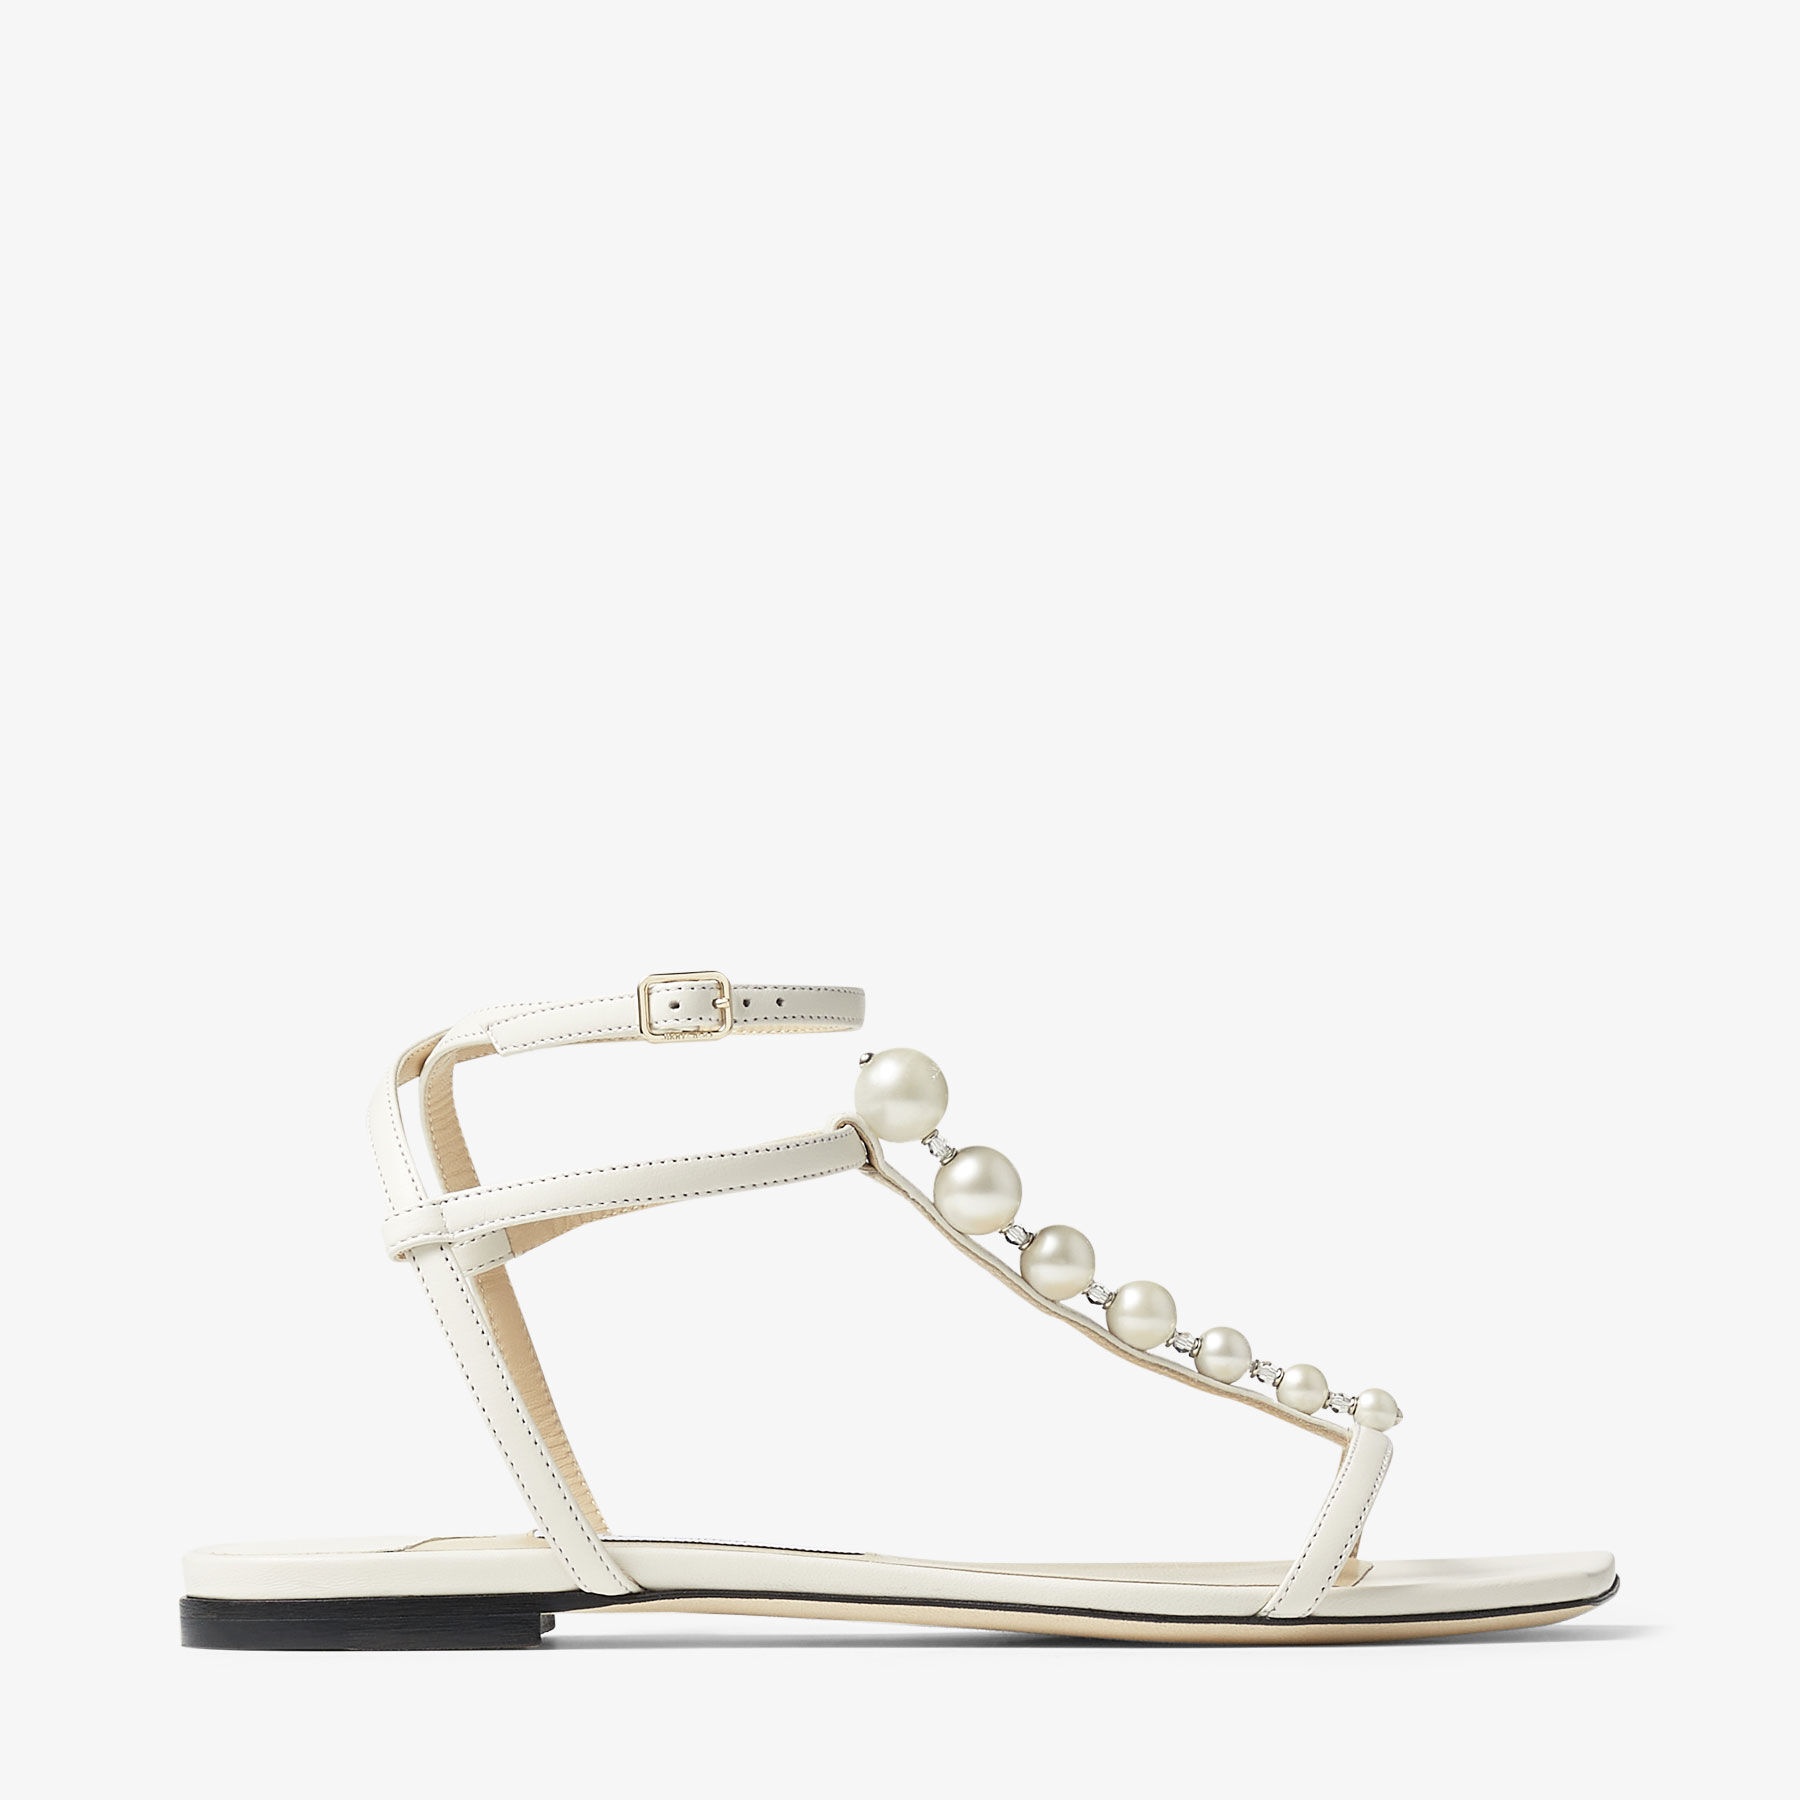 Amari Flat
Latte Nappa Leather Flat Sandals with Pearls - 1